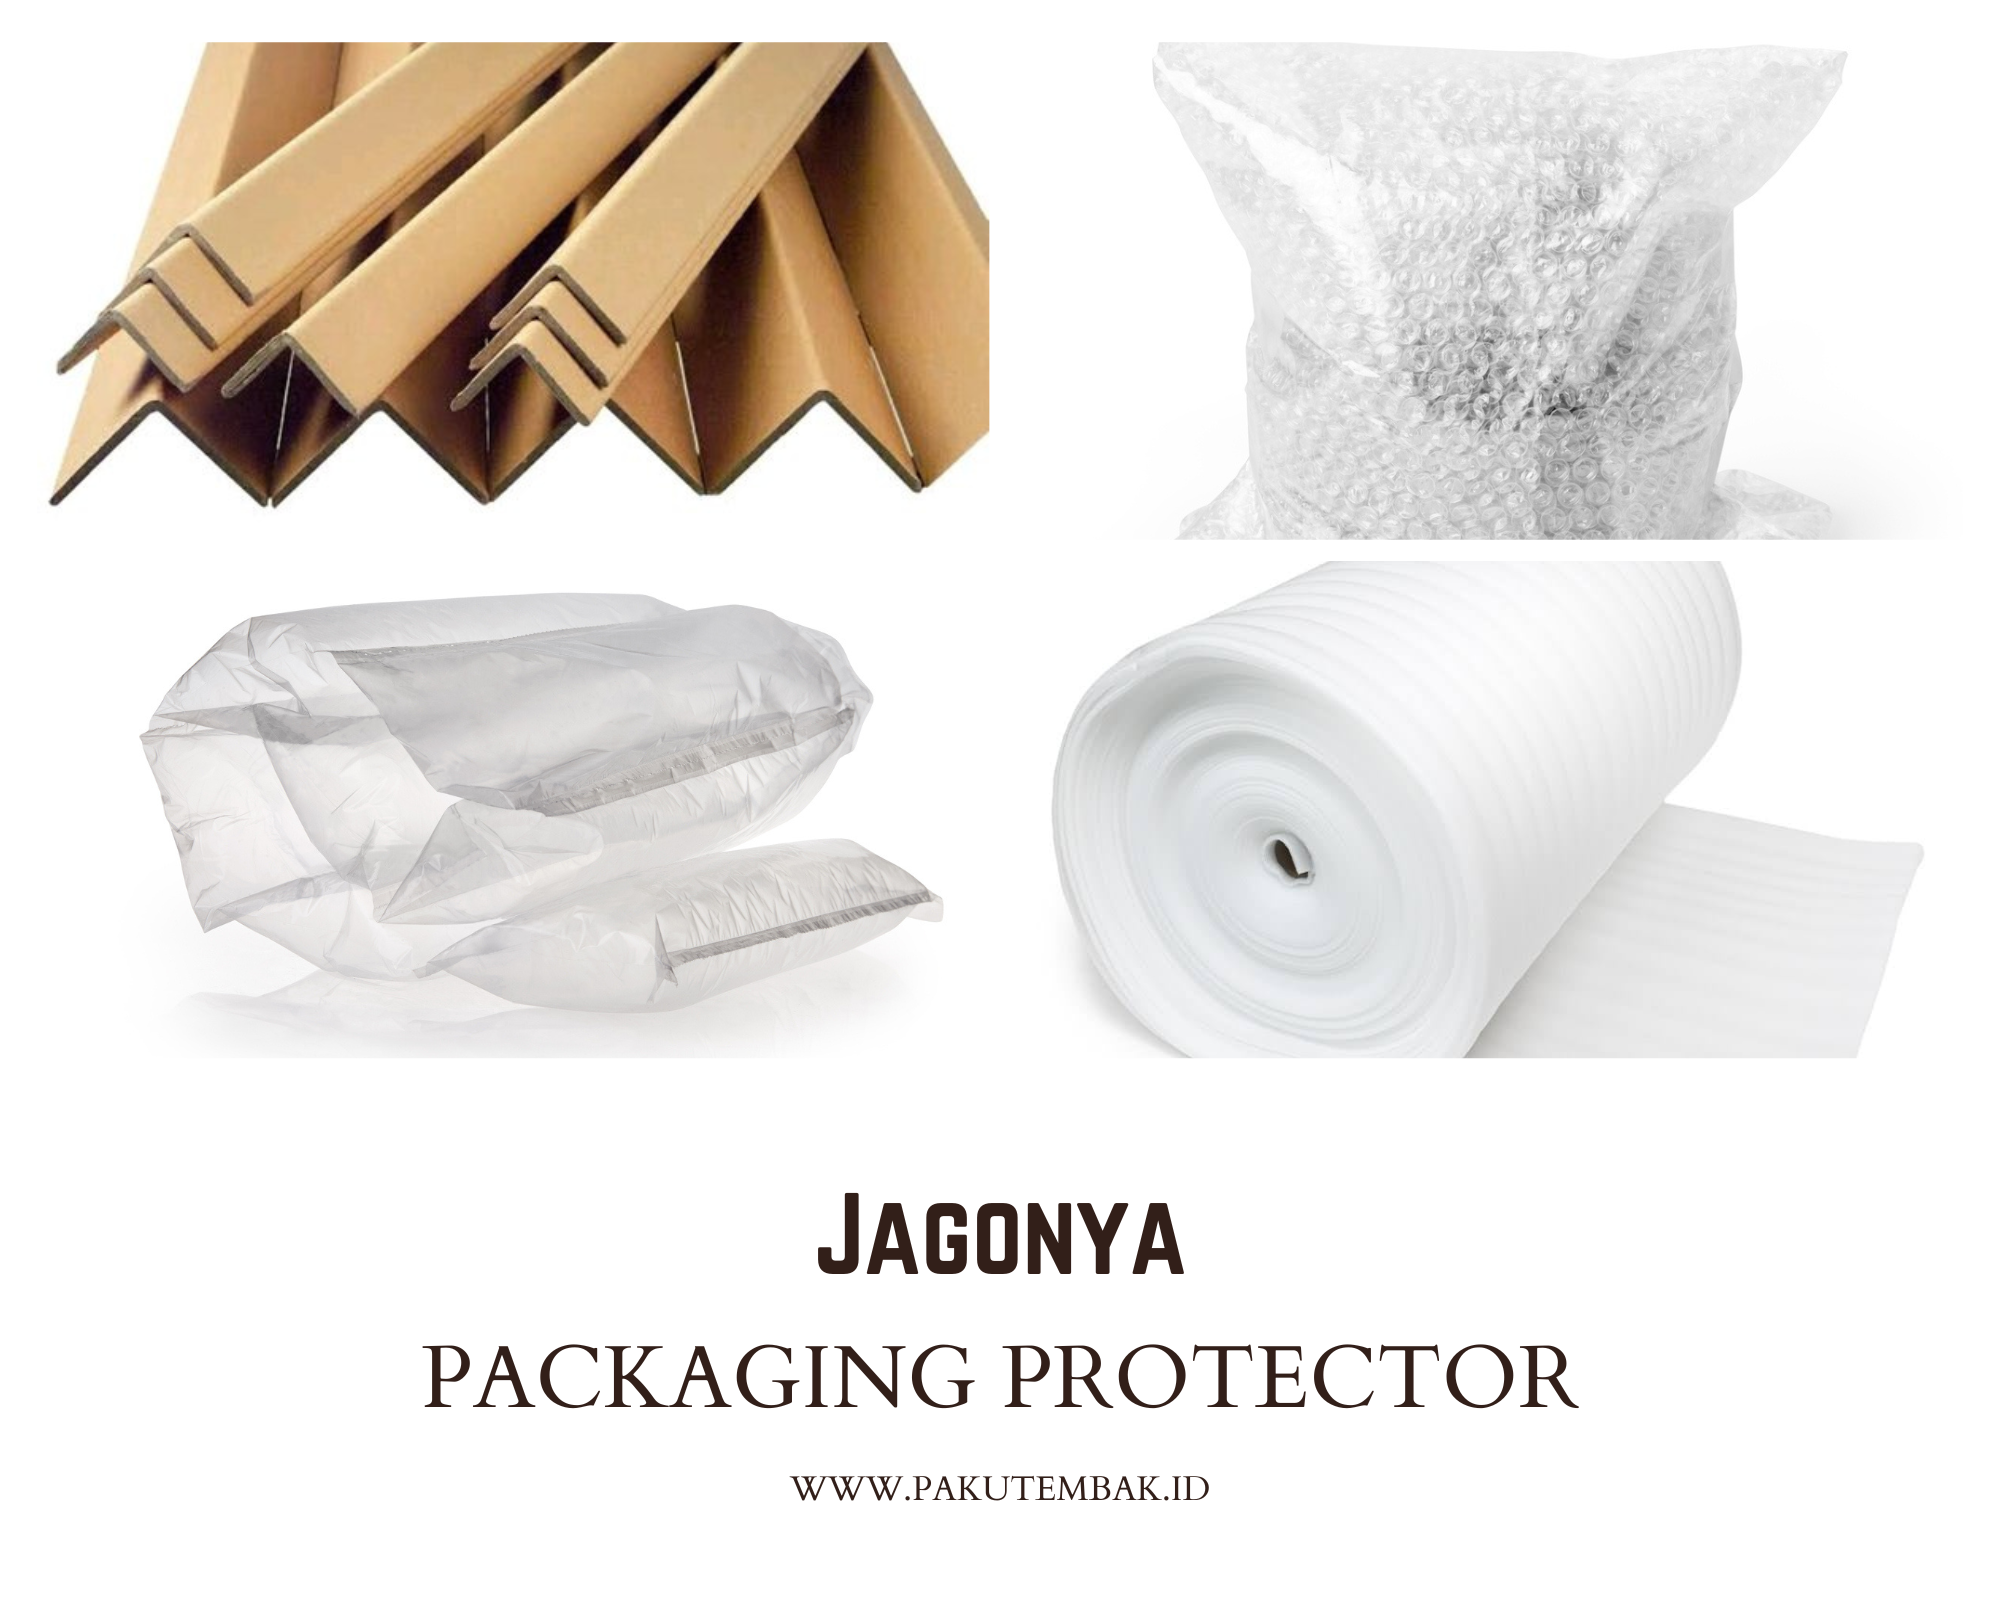 Packaging Protector